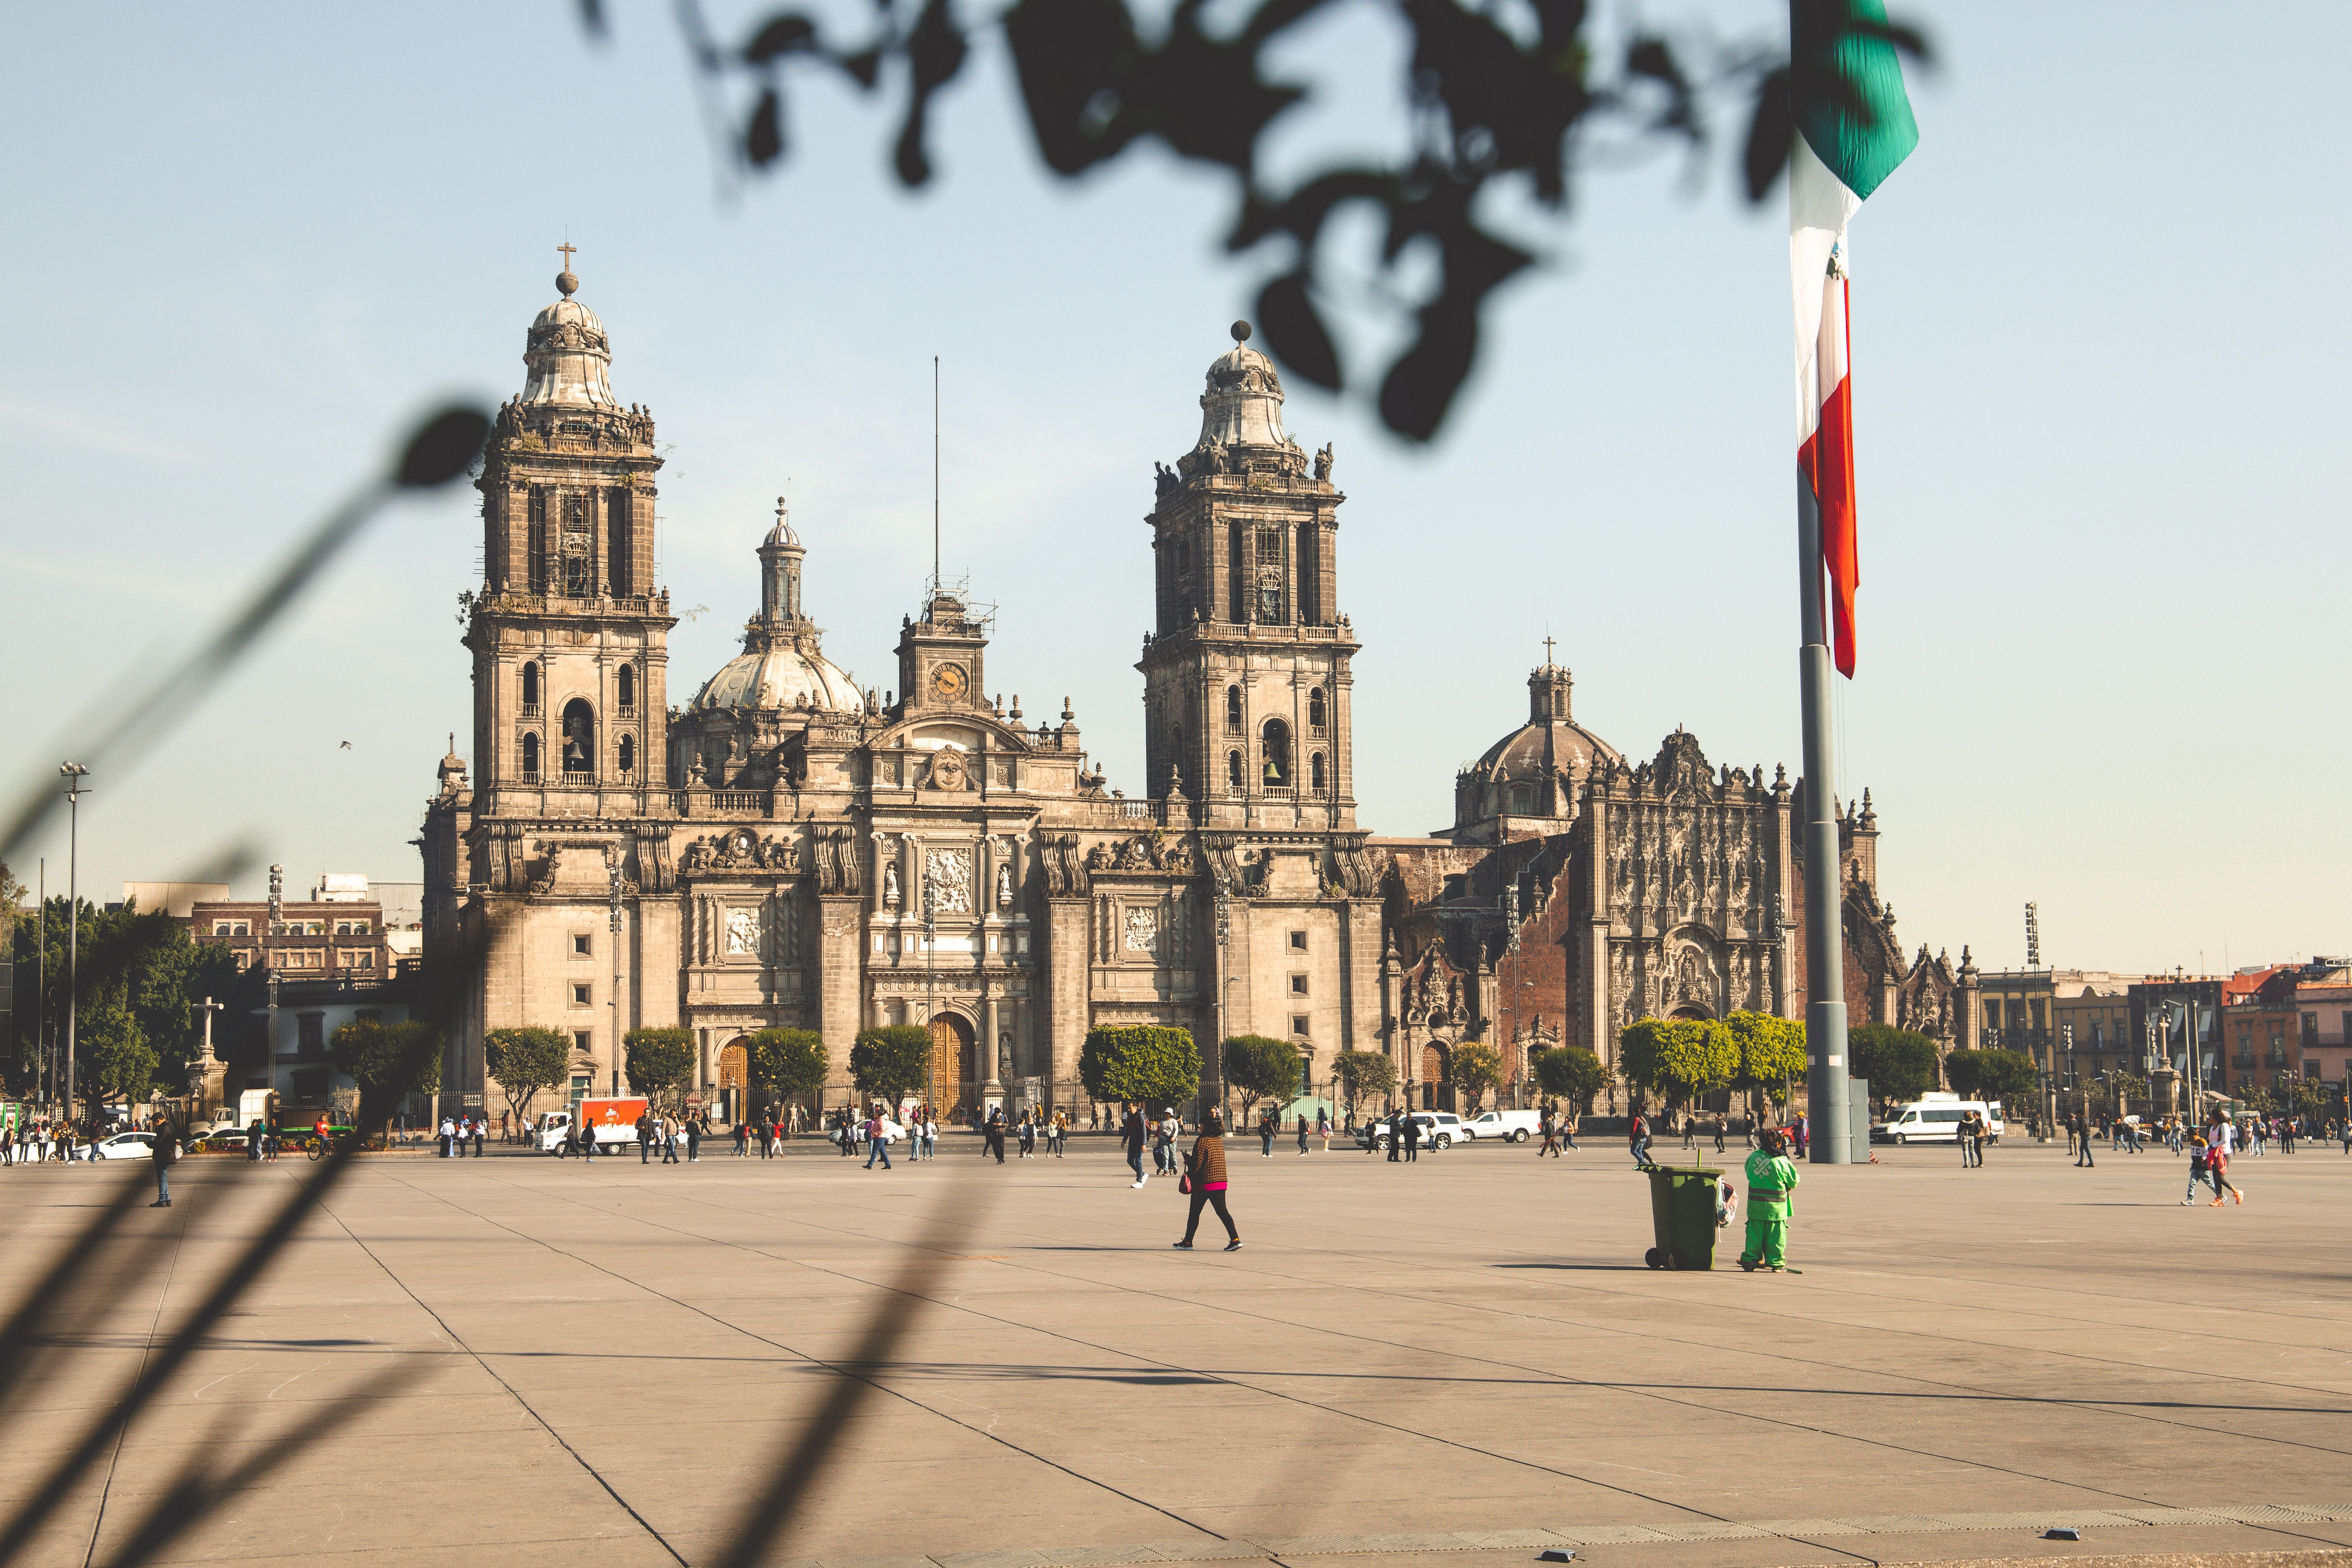 Architecture in the town square in Mexico City Mexico